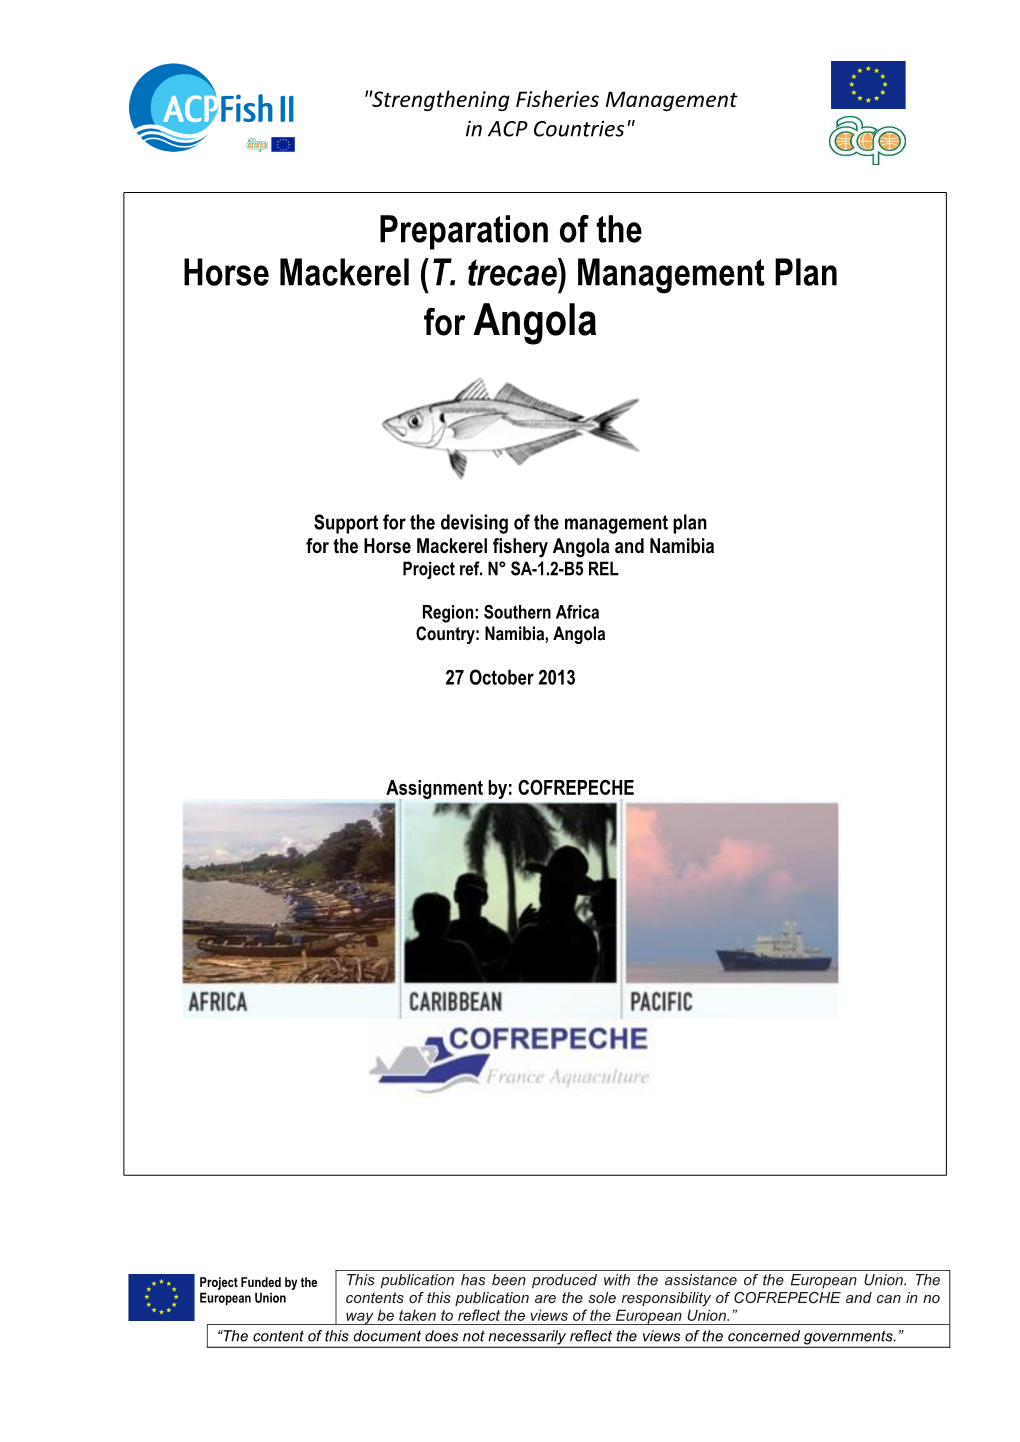 Preparation of the Horse Mackerel (T. Trecae) Management Plan for Angola